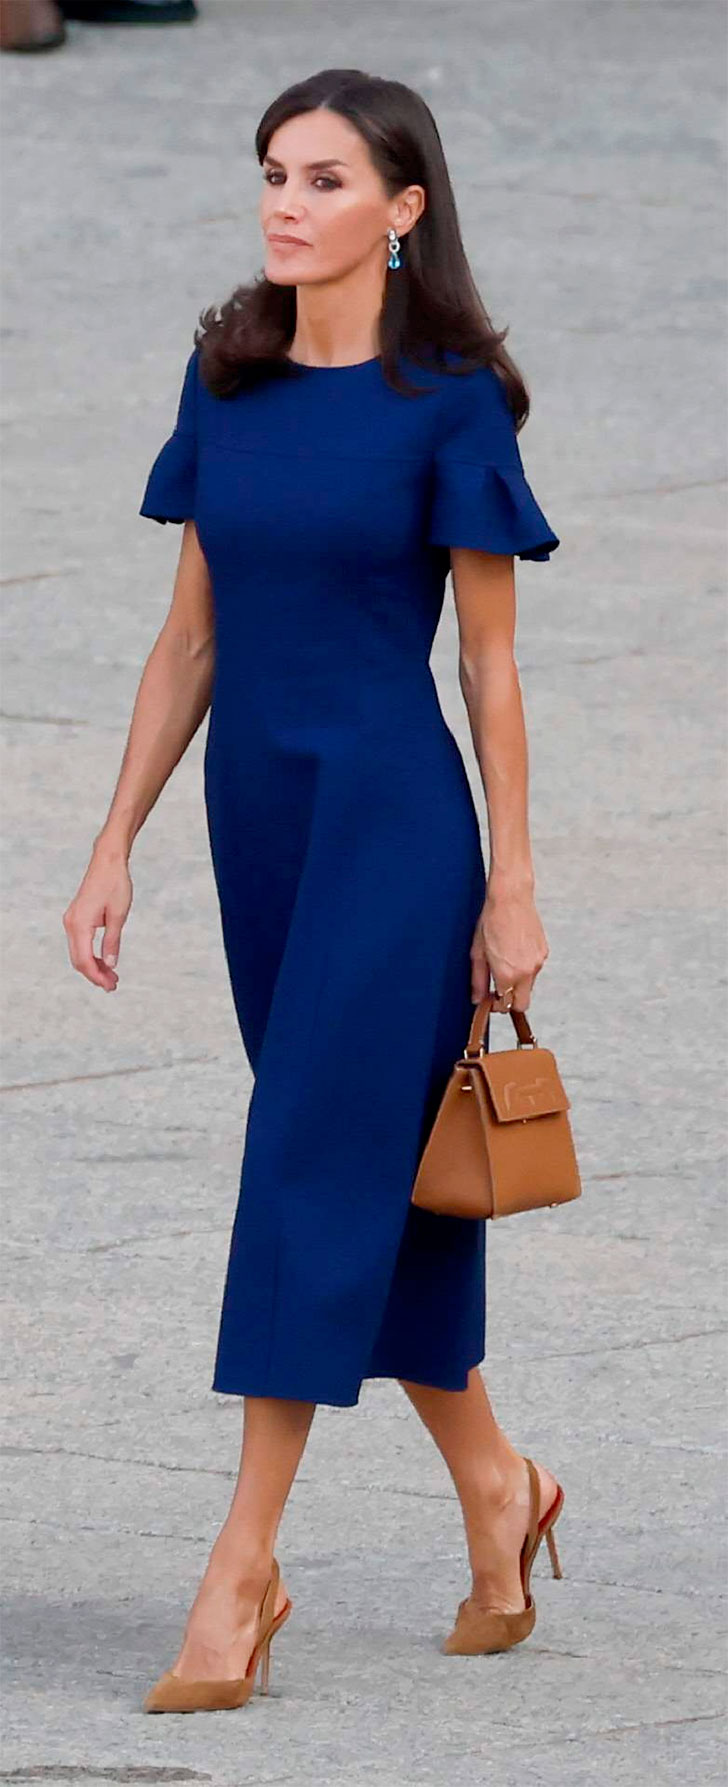 Queen Letizia navy blue dress